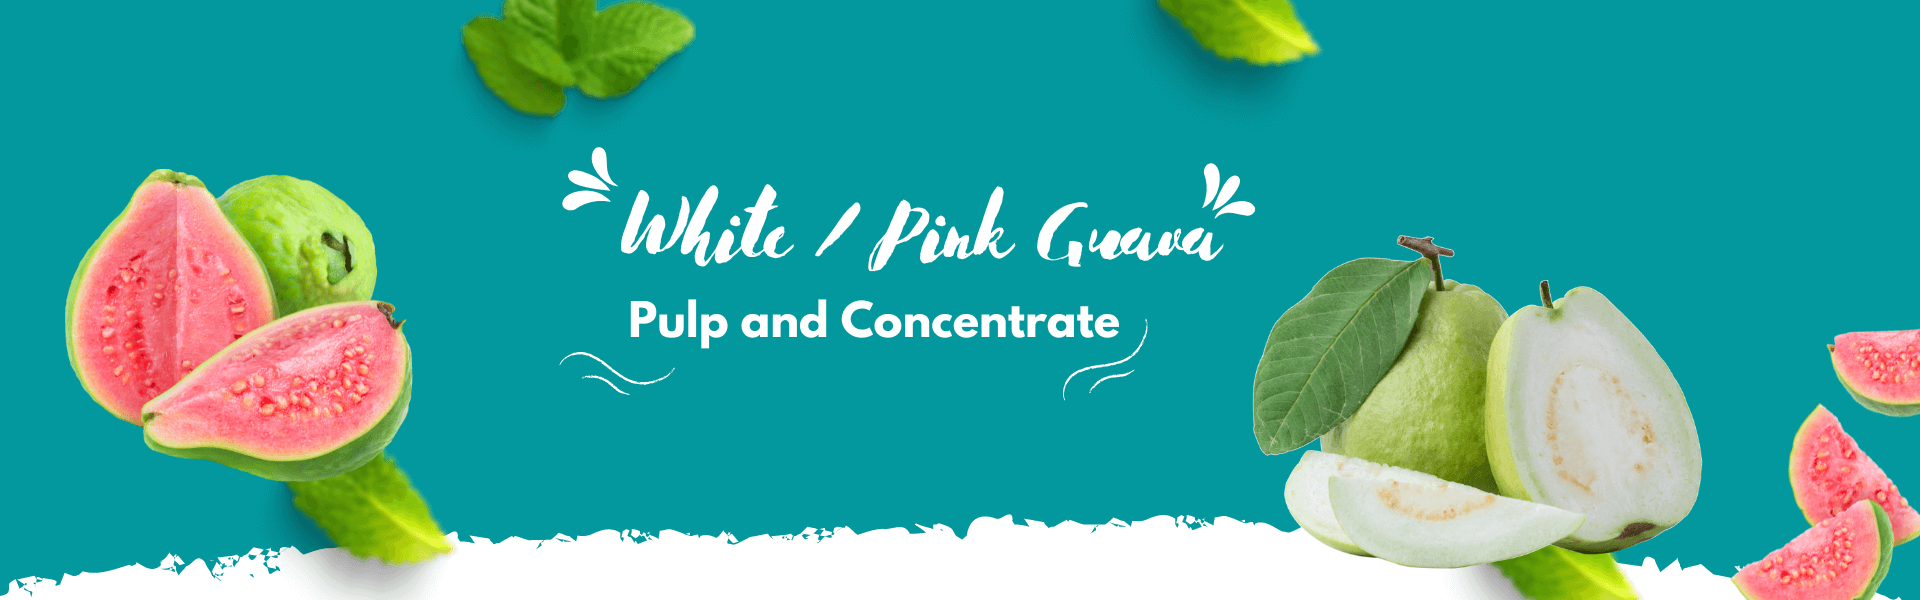 White Pink Guava